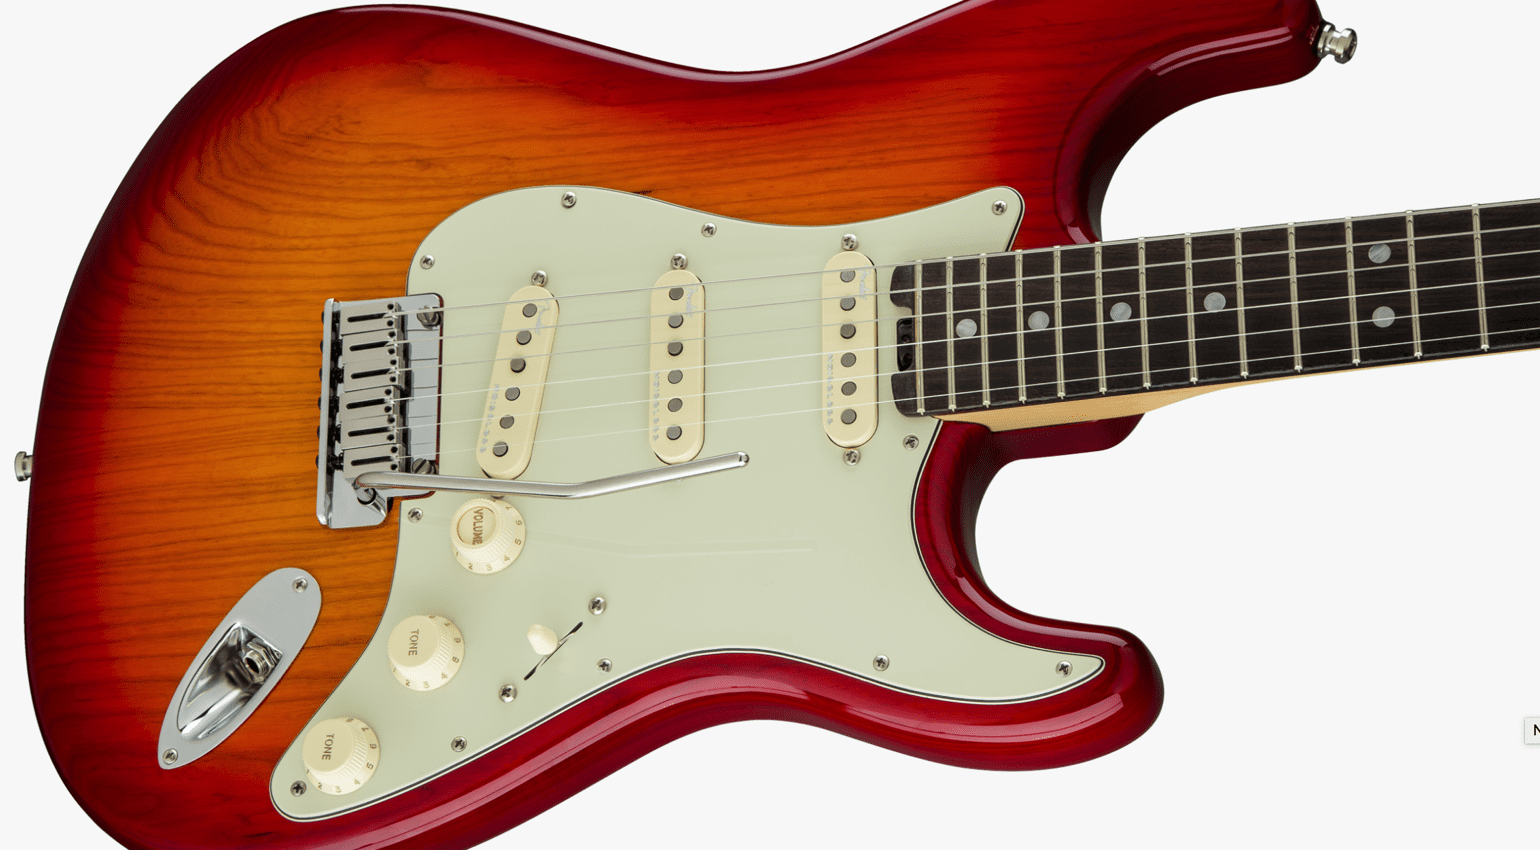 Fender American Elite Series Stratocaster - The latest incarnation 